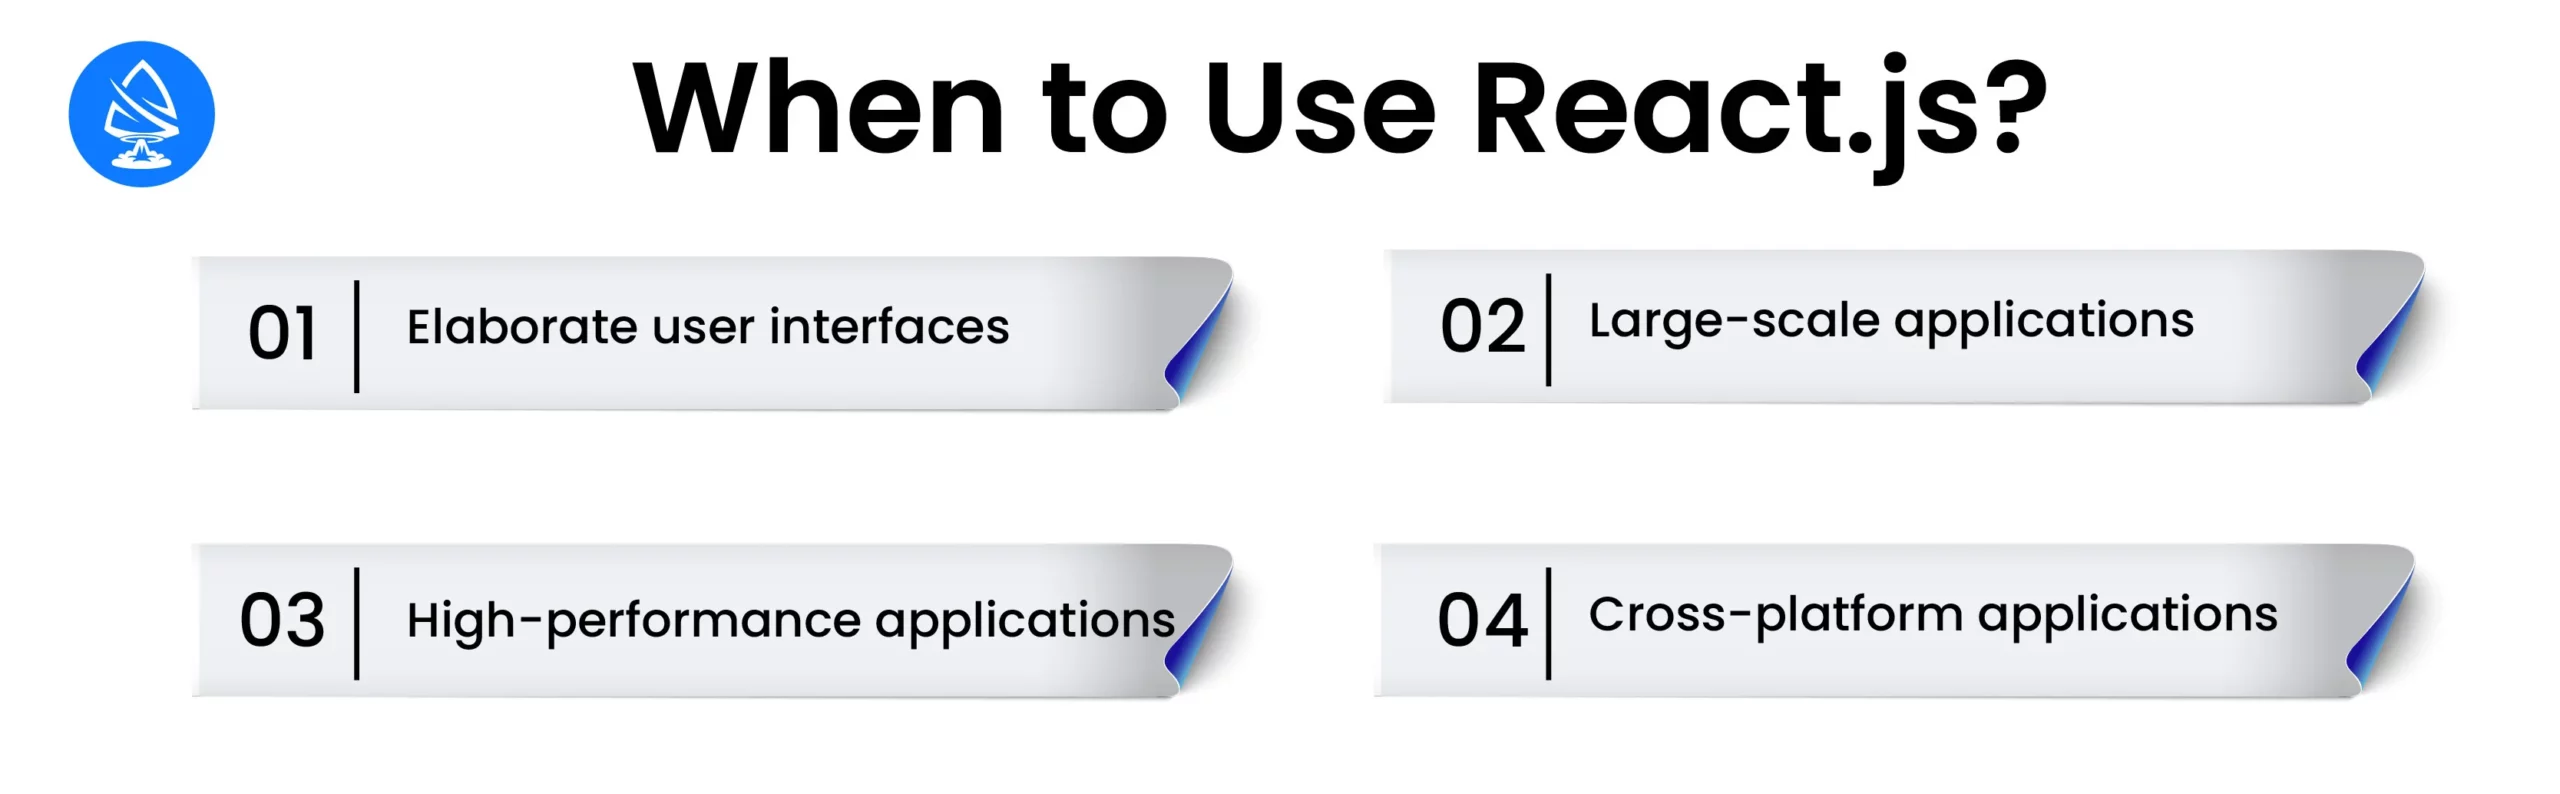 When to Use Reactjs?